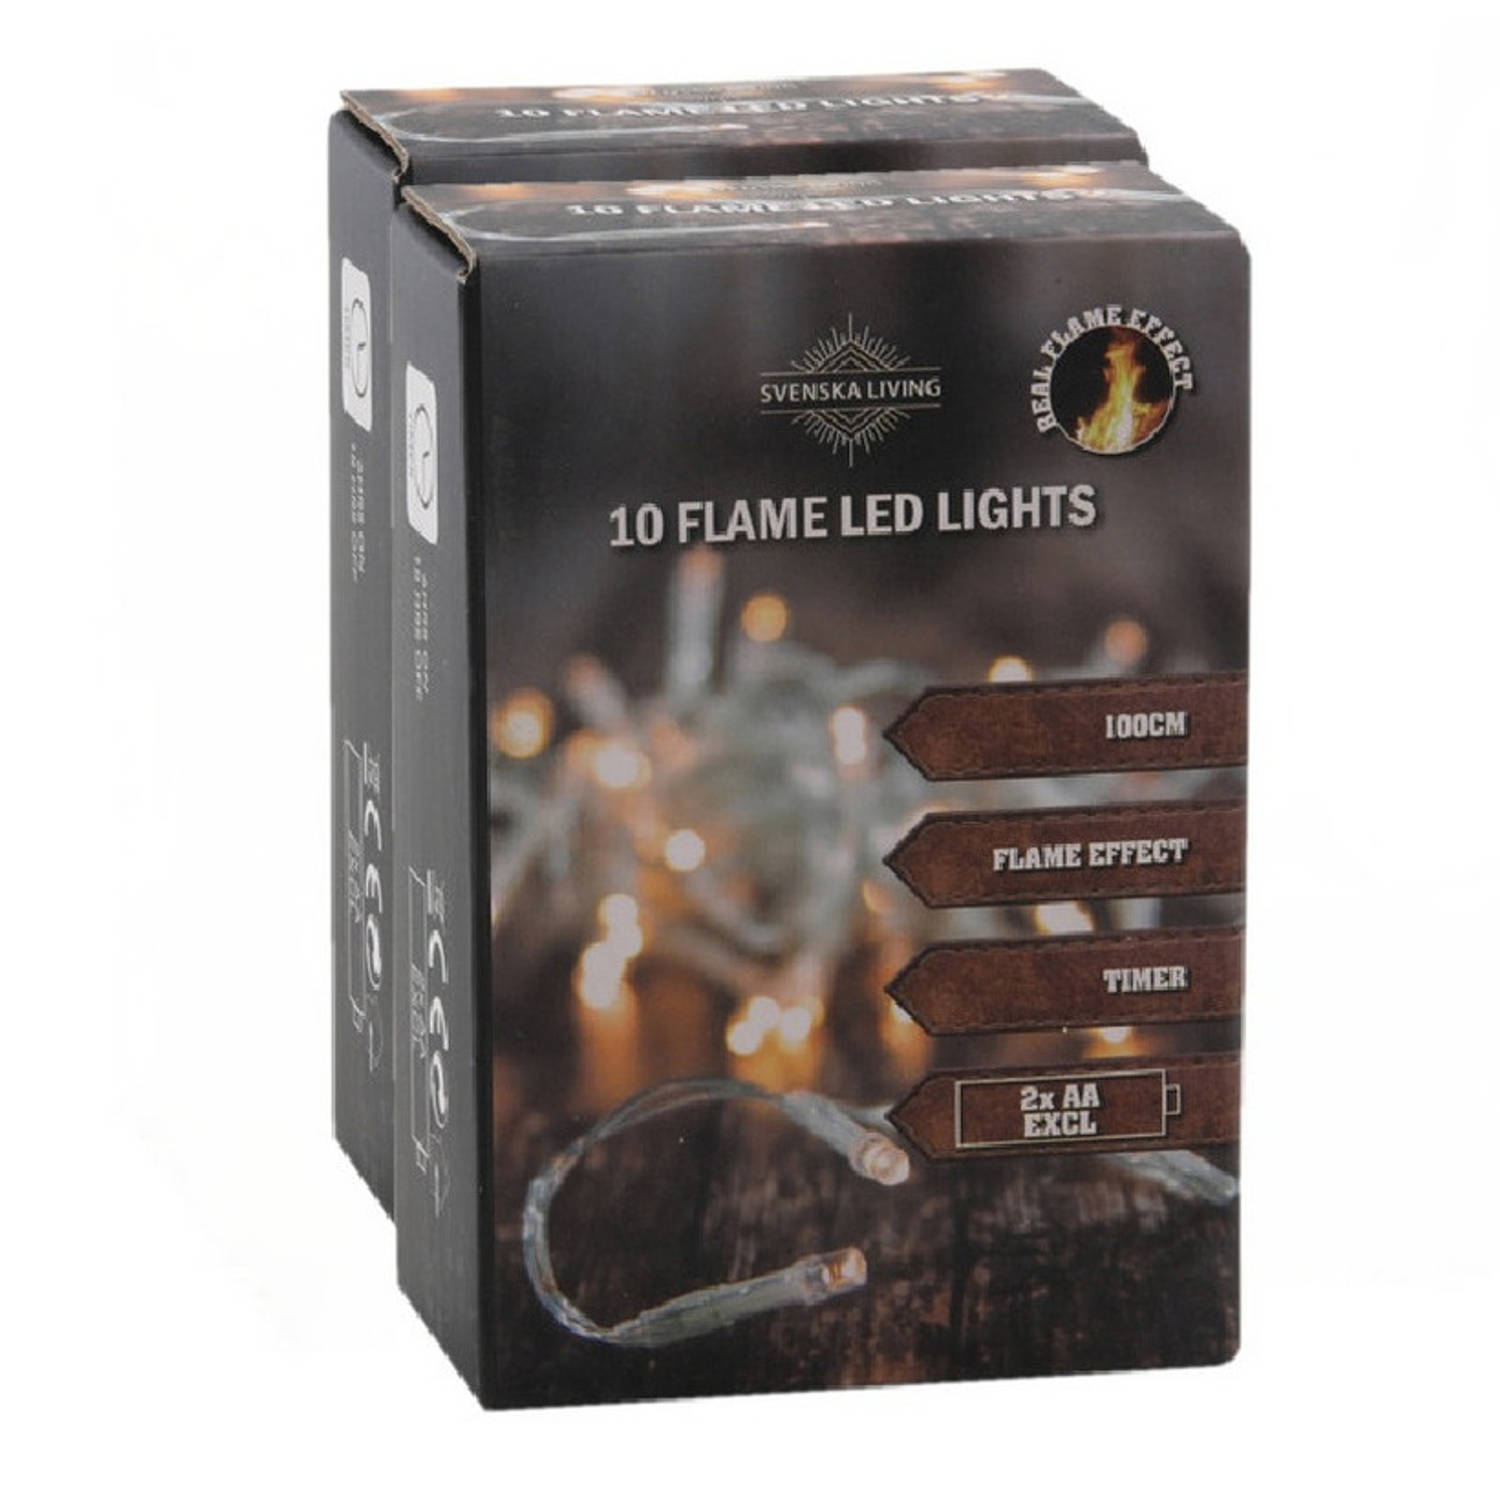 Svenska Living lichtsnoeren - 2x -warm wit vlam effect 10 leds -100cm - Kerstverlichting kerstboom